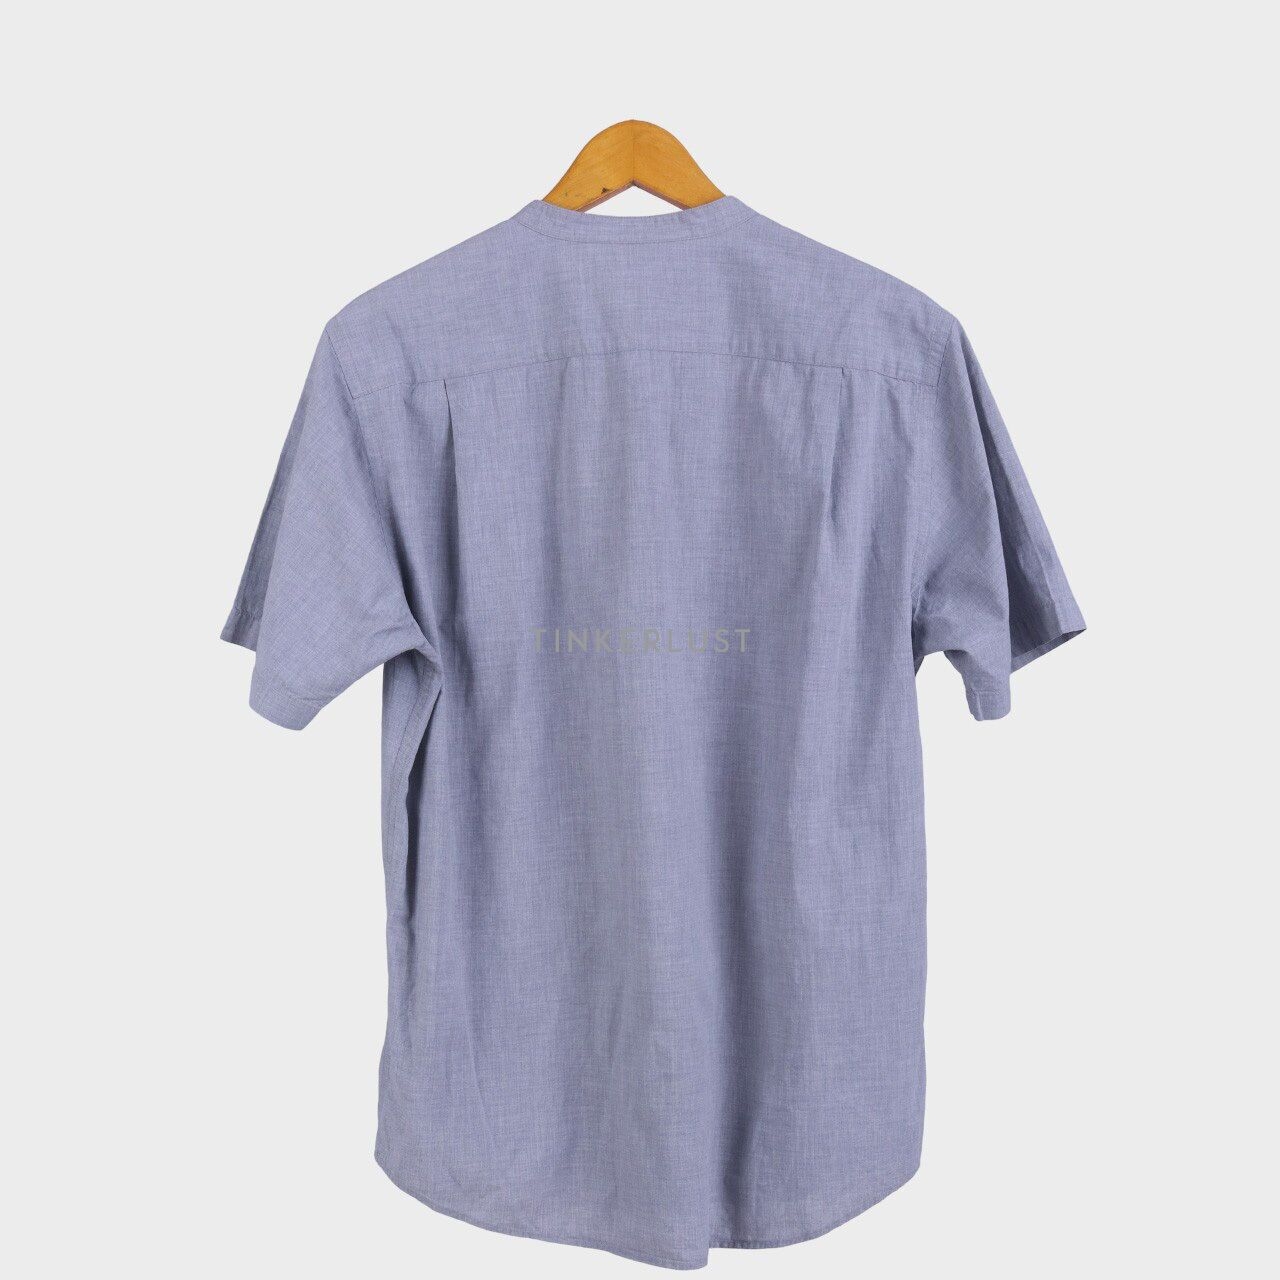 UNIQLO Ash Grey Shirt